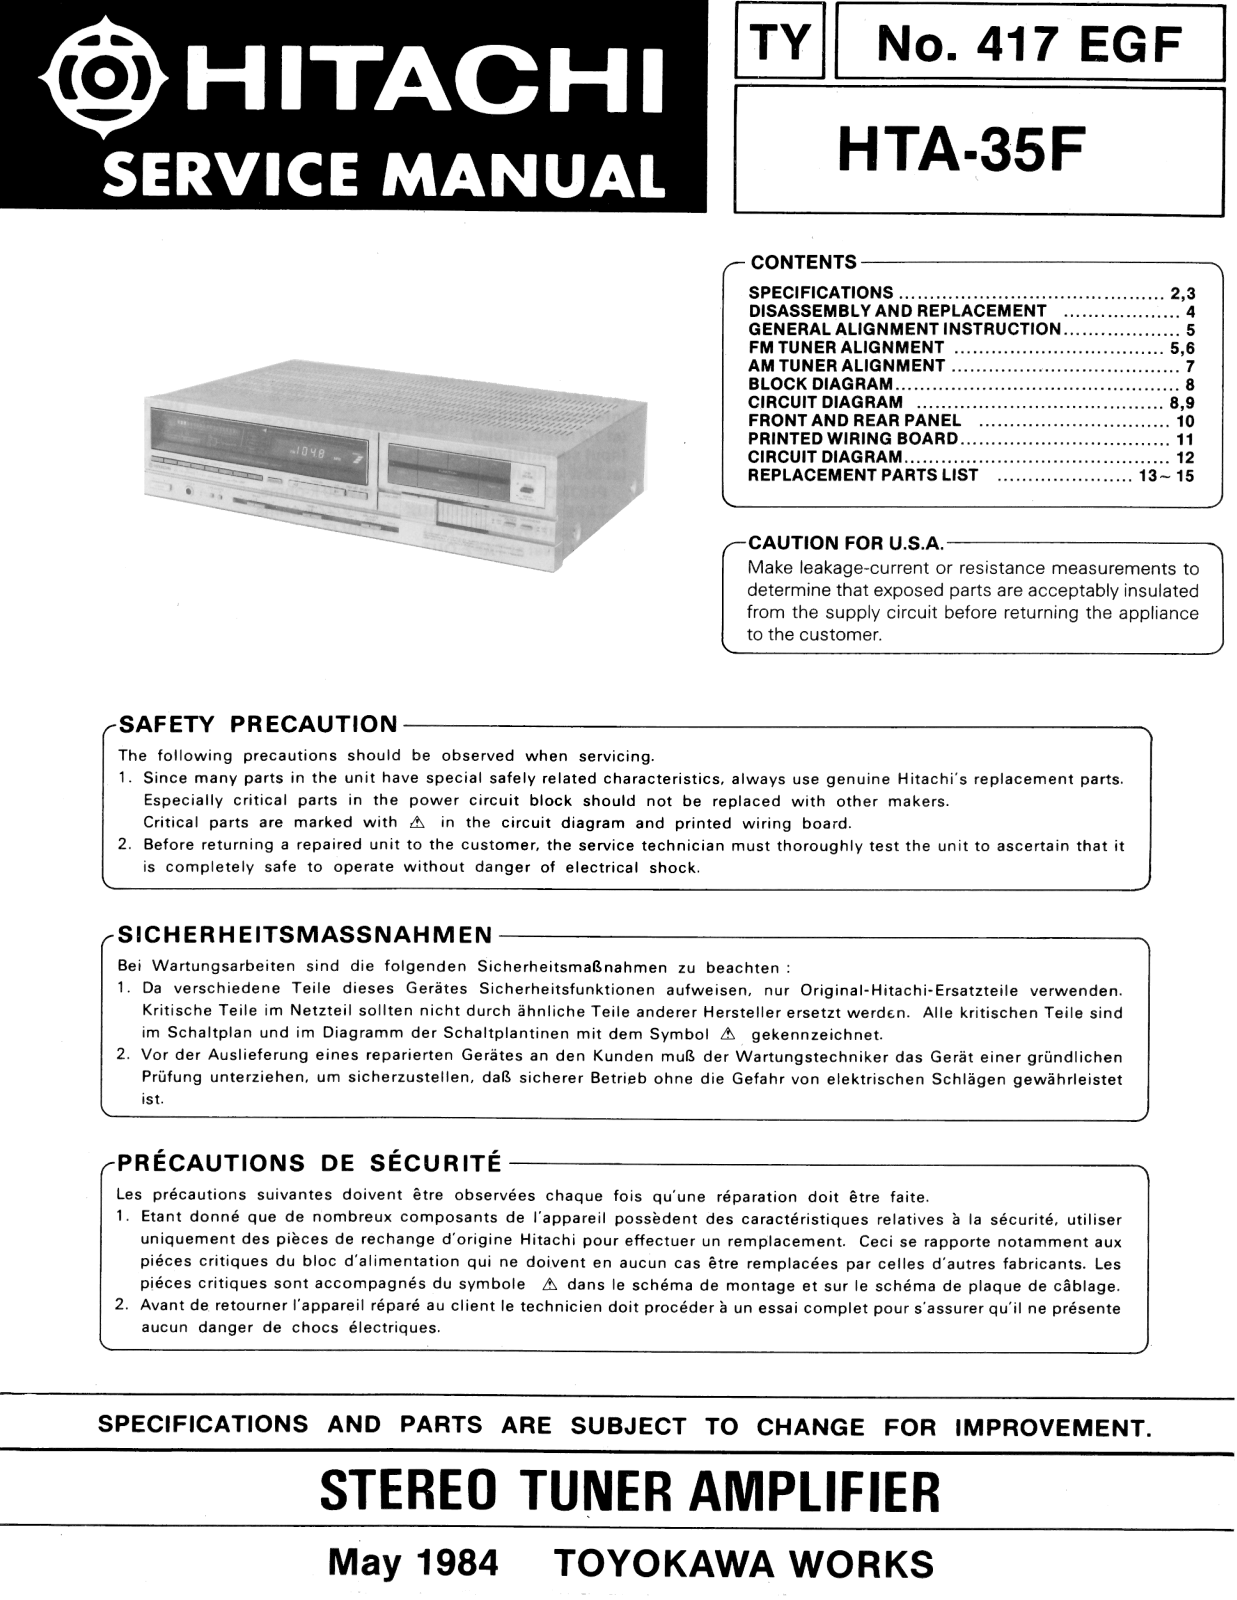 Hitachi HT-A35-F Service Manual